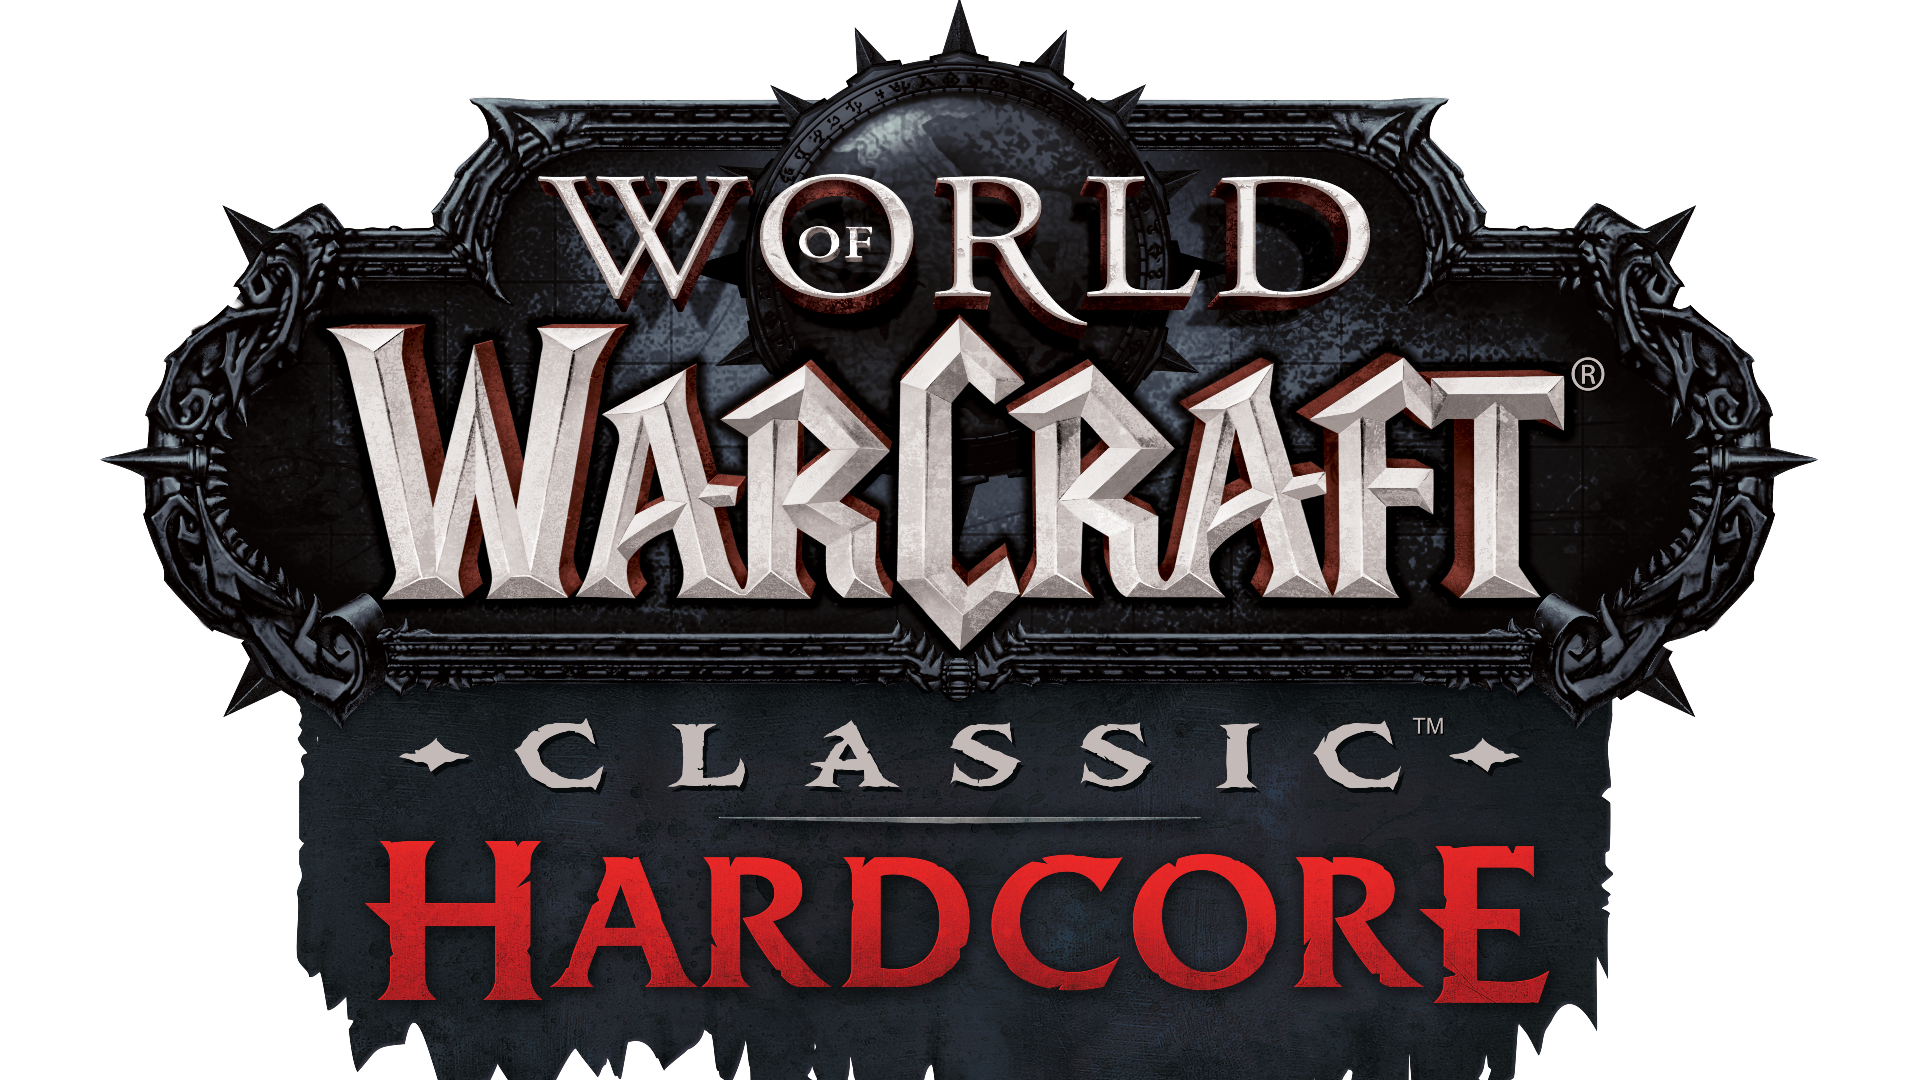 World of Warcraft(WOW) Server Status – Is World of Warcraft (WOW